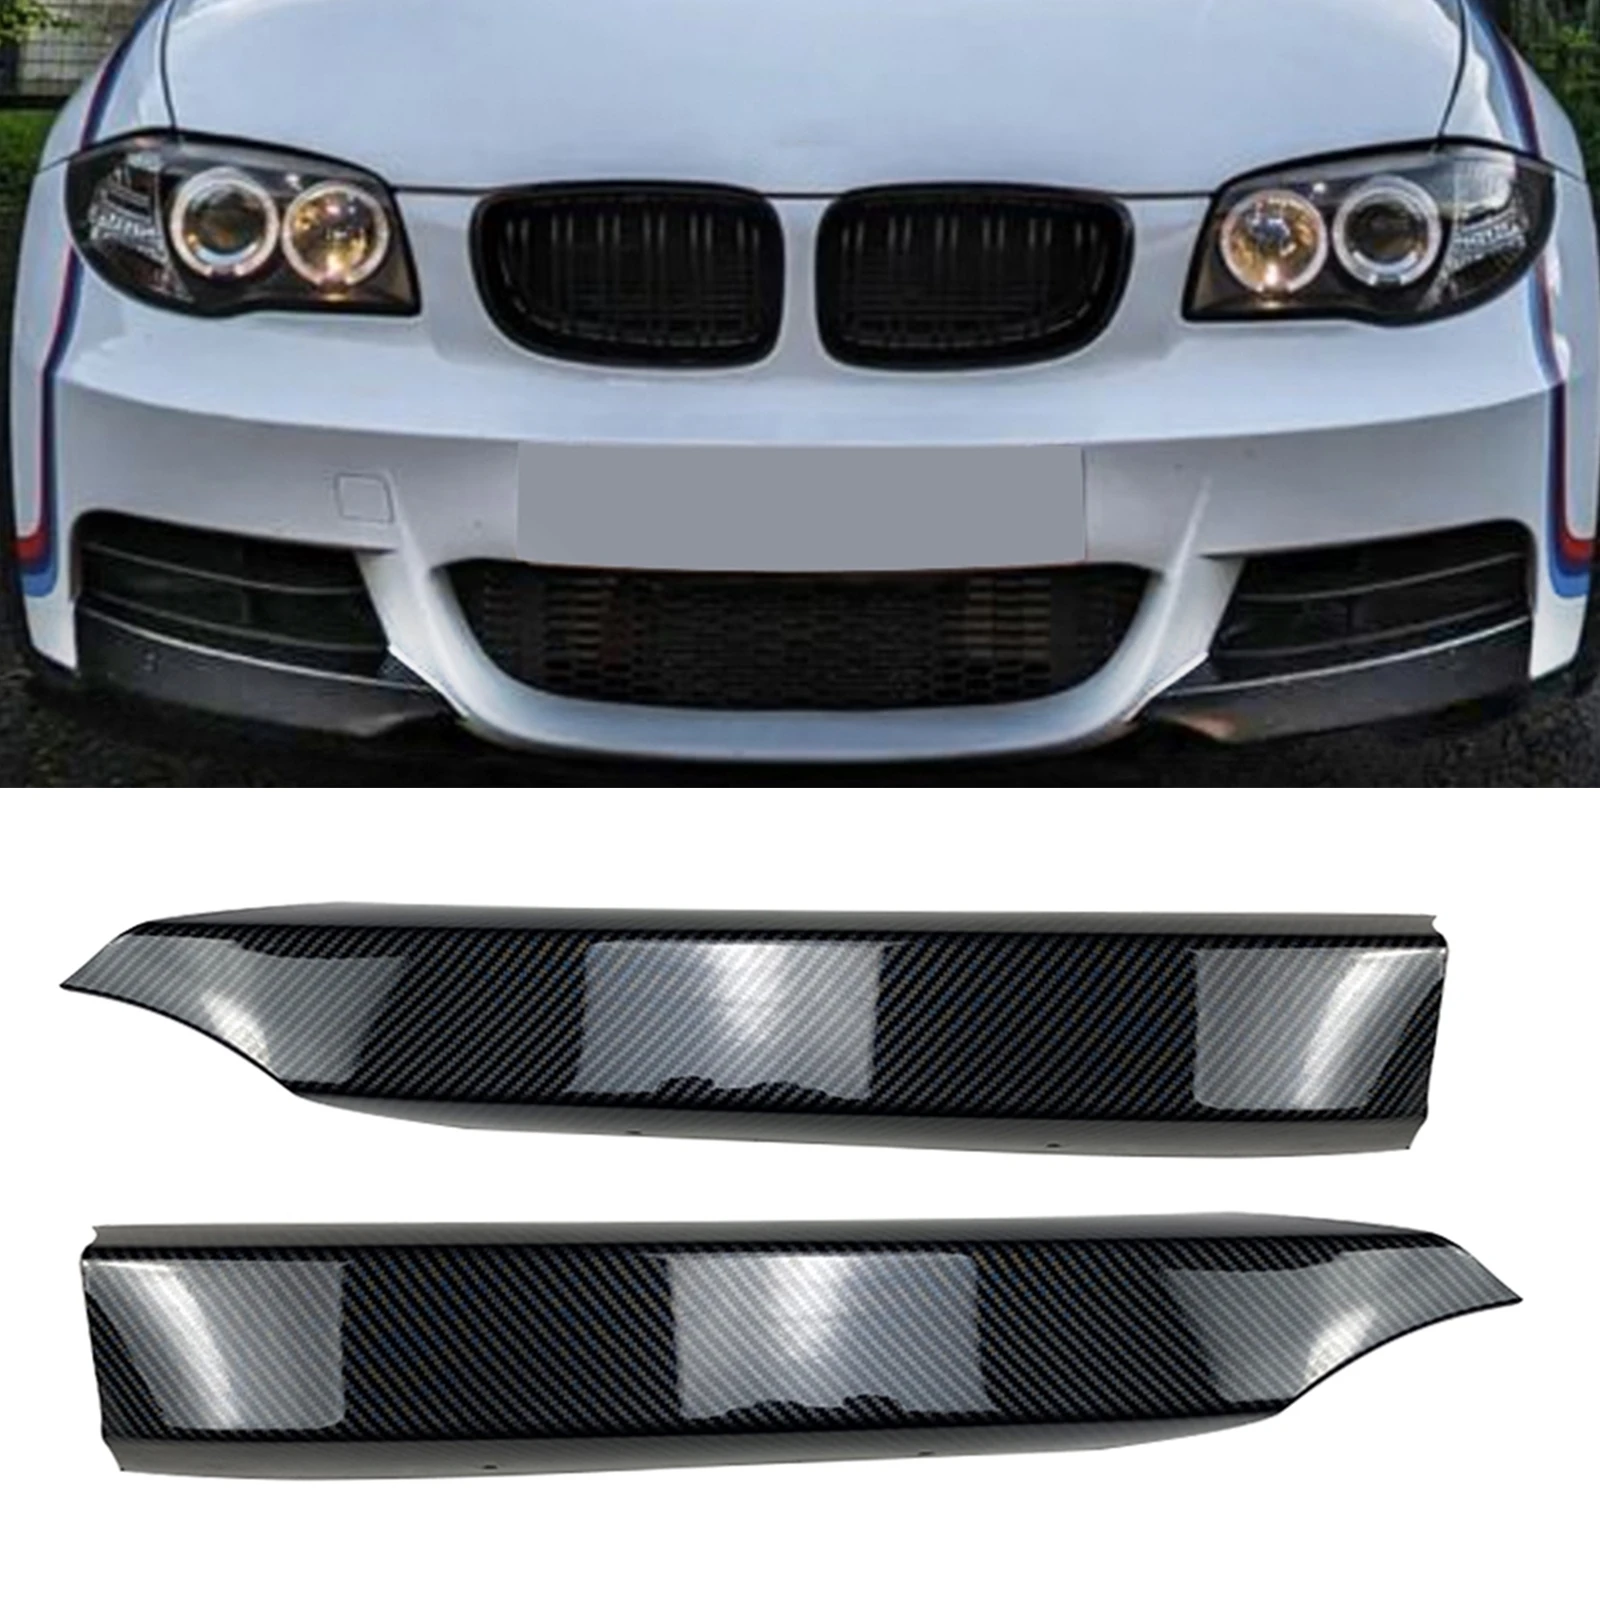 Front Bumper Side Splitter Cover For BMW 1 Series E82 E88 M-Tech 2008-2013 Lower Fog Light Air Vent Spoiler Trim Lip Replacement